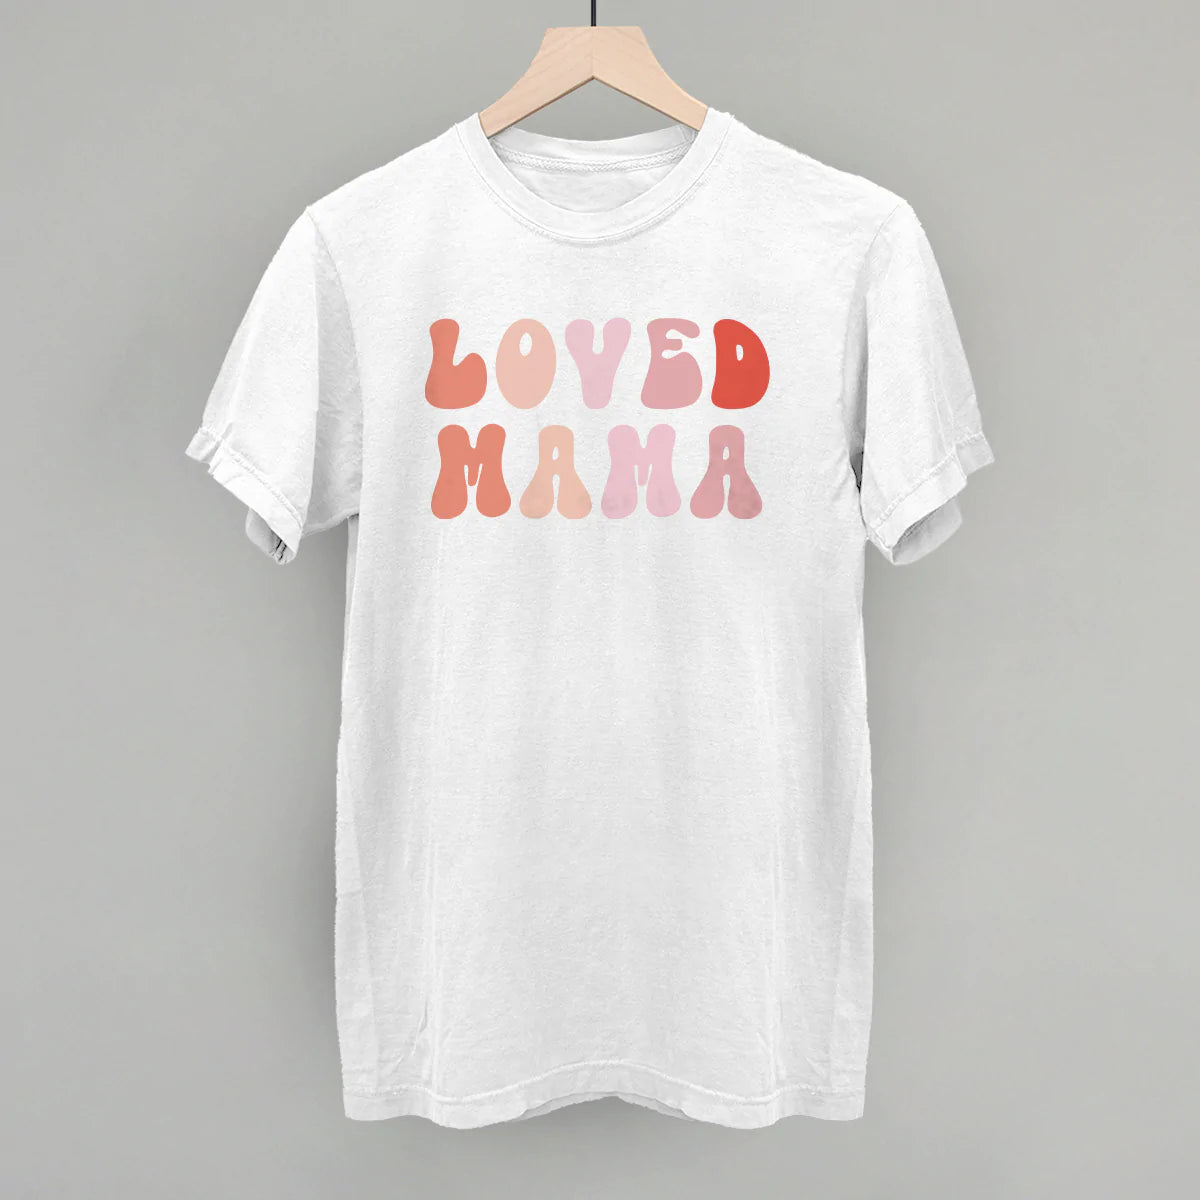 Loved Mama (Retro)